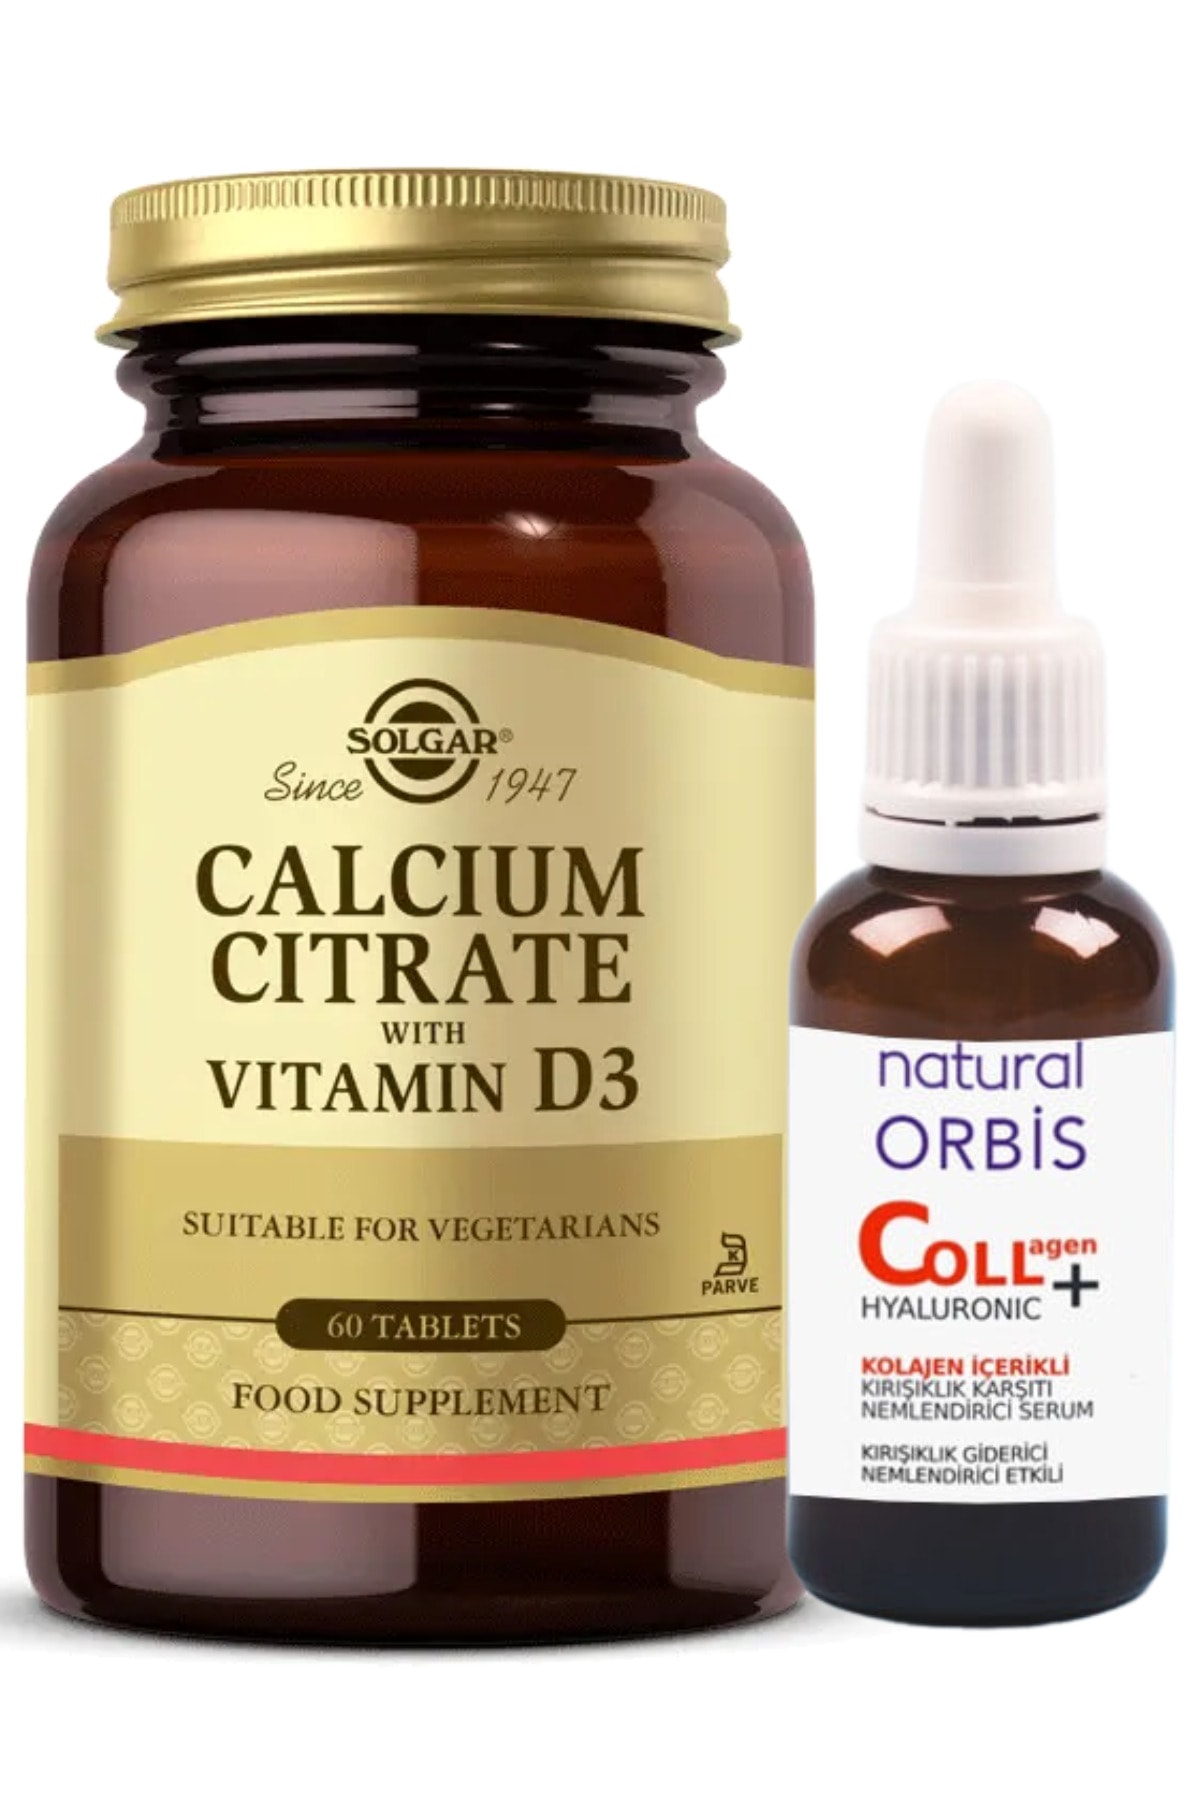 Solgar Calcium Citrate With Vitamin D3 60 Tablet (HEDIYE KOLAJEN SERUM 30 ML KALSİYUM SİTRAT) Skt:09/24